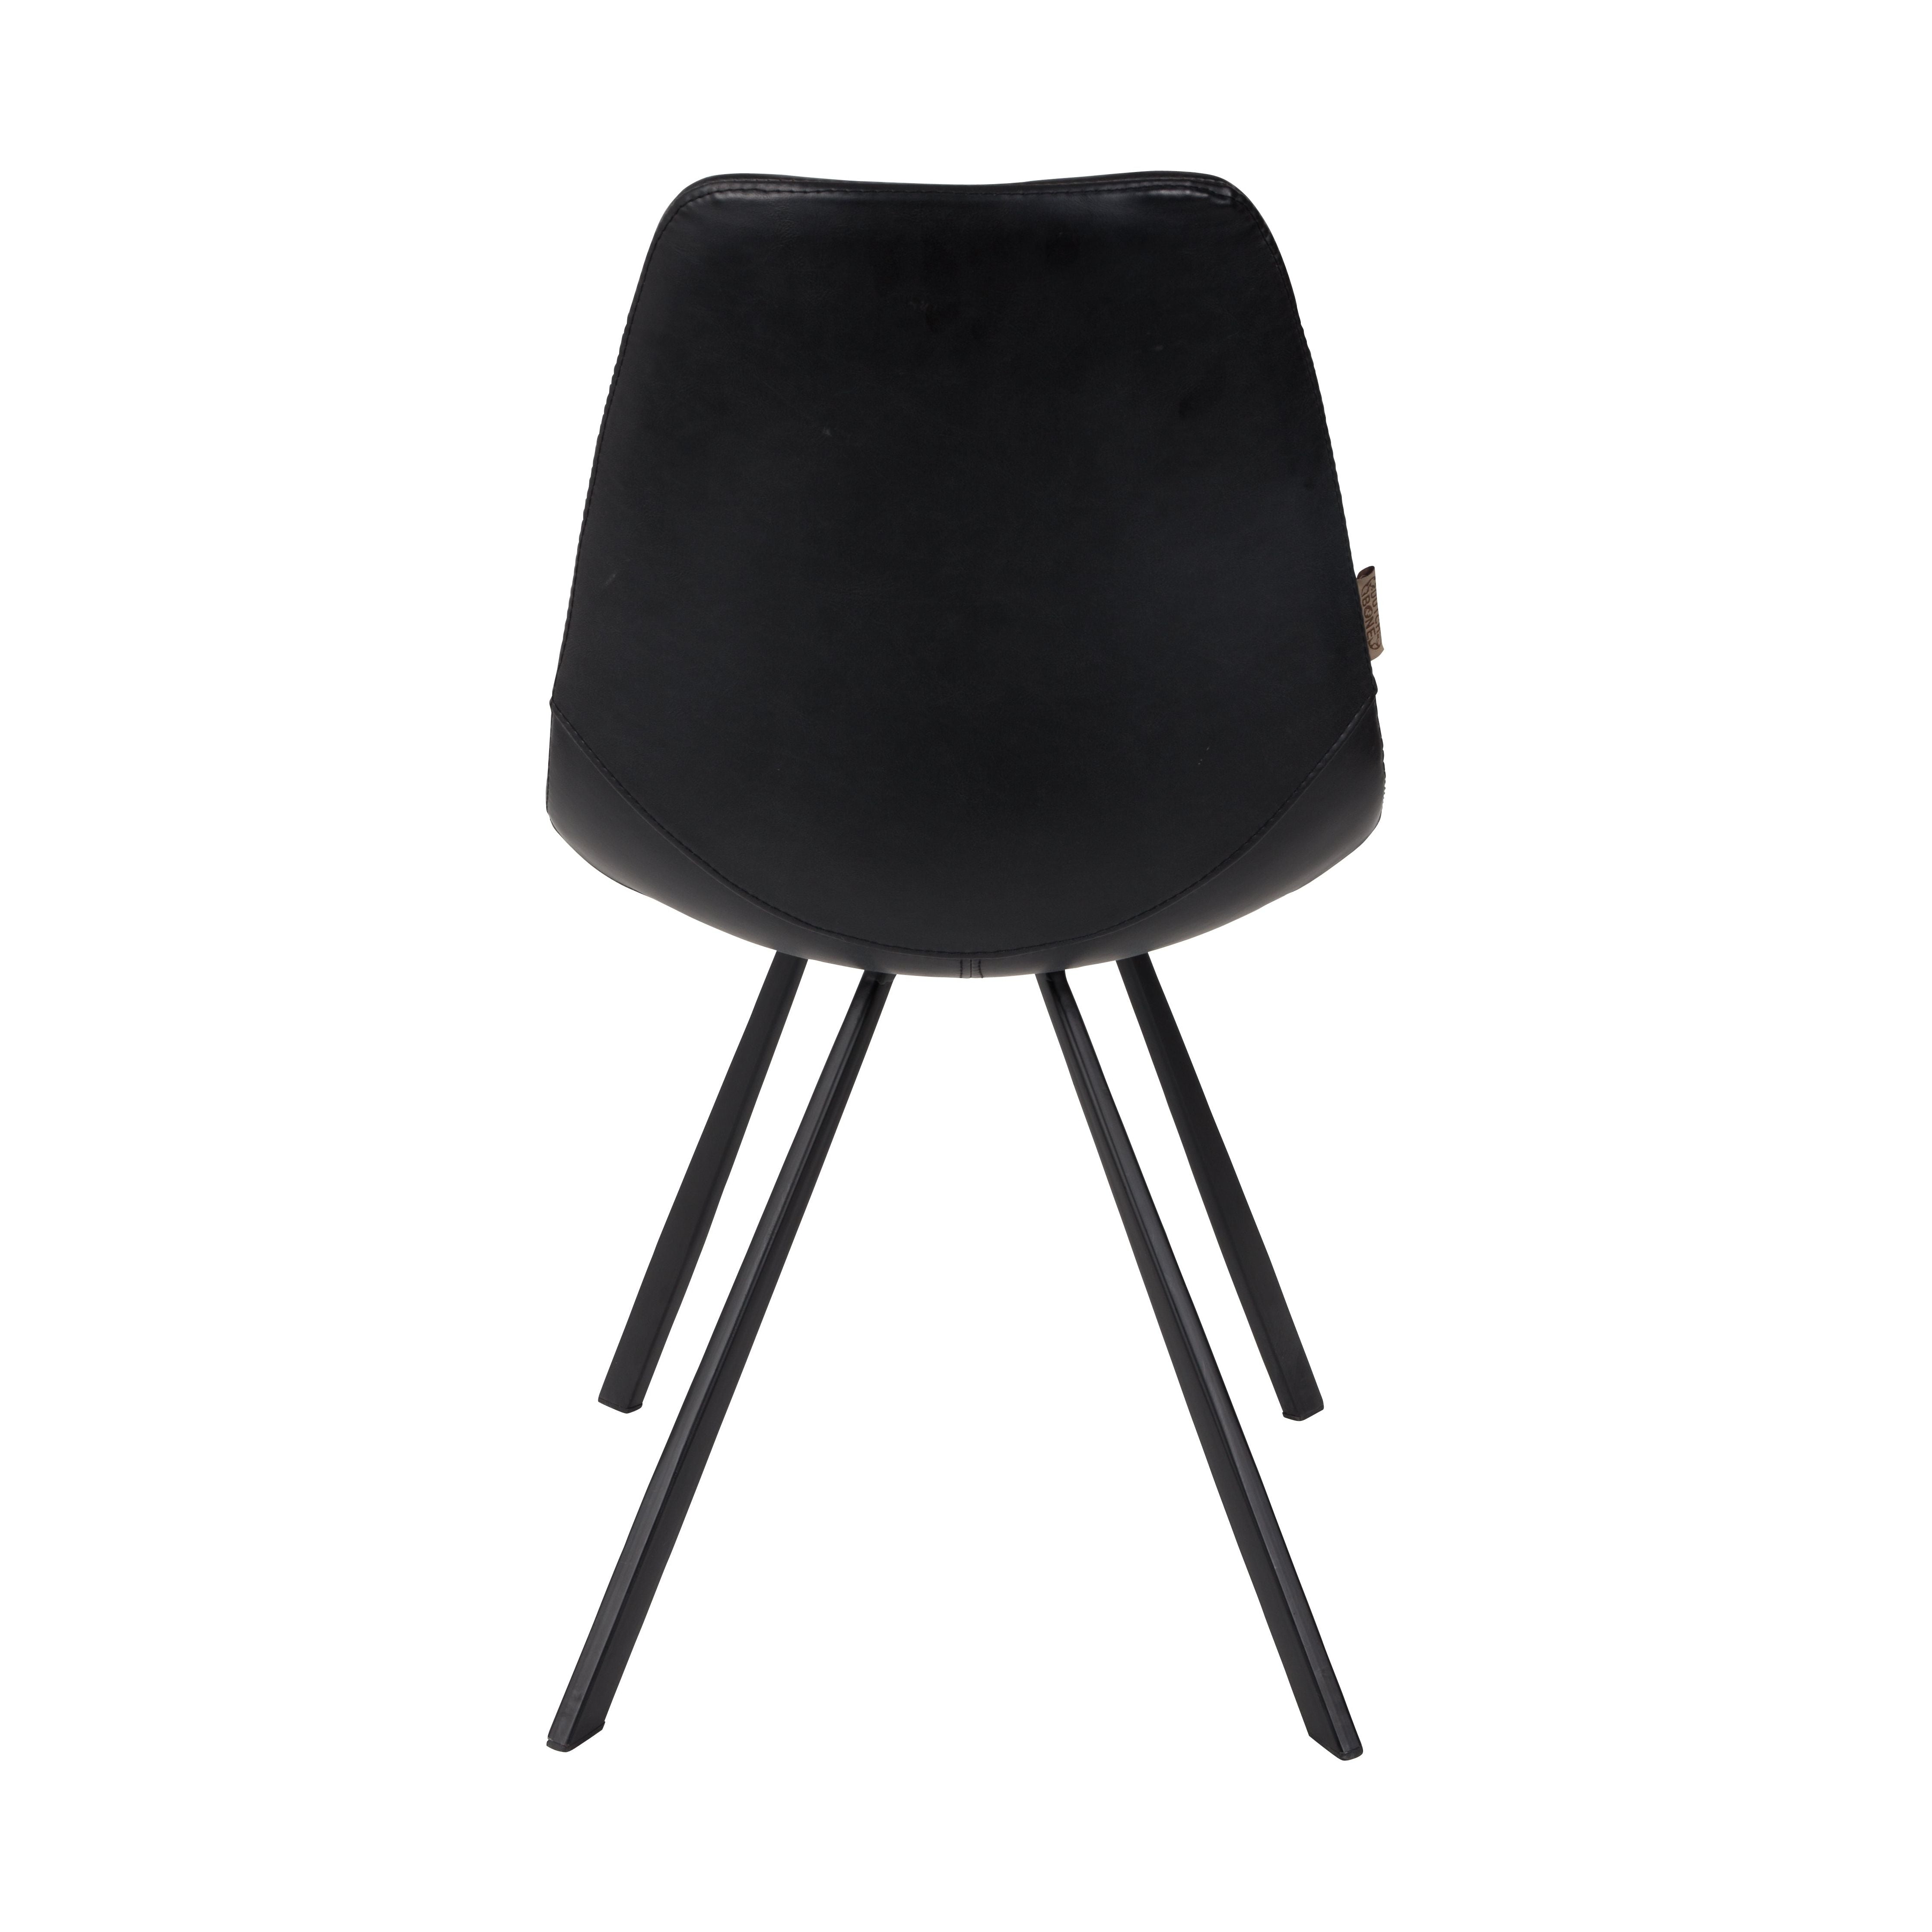 Chair franky black